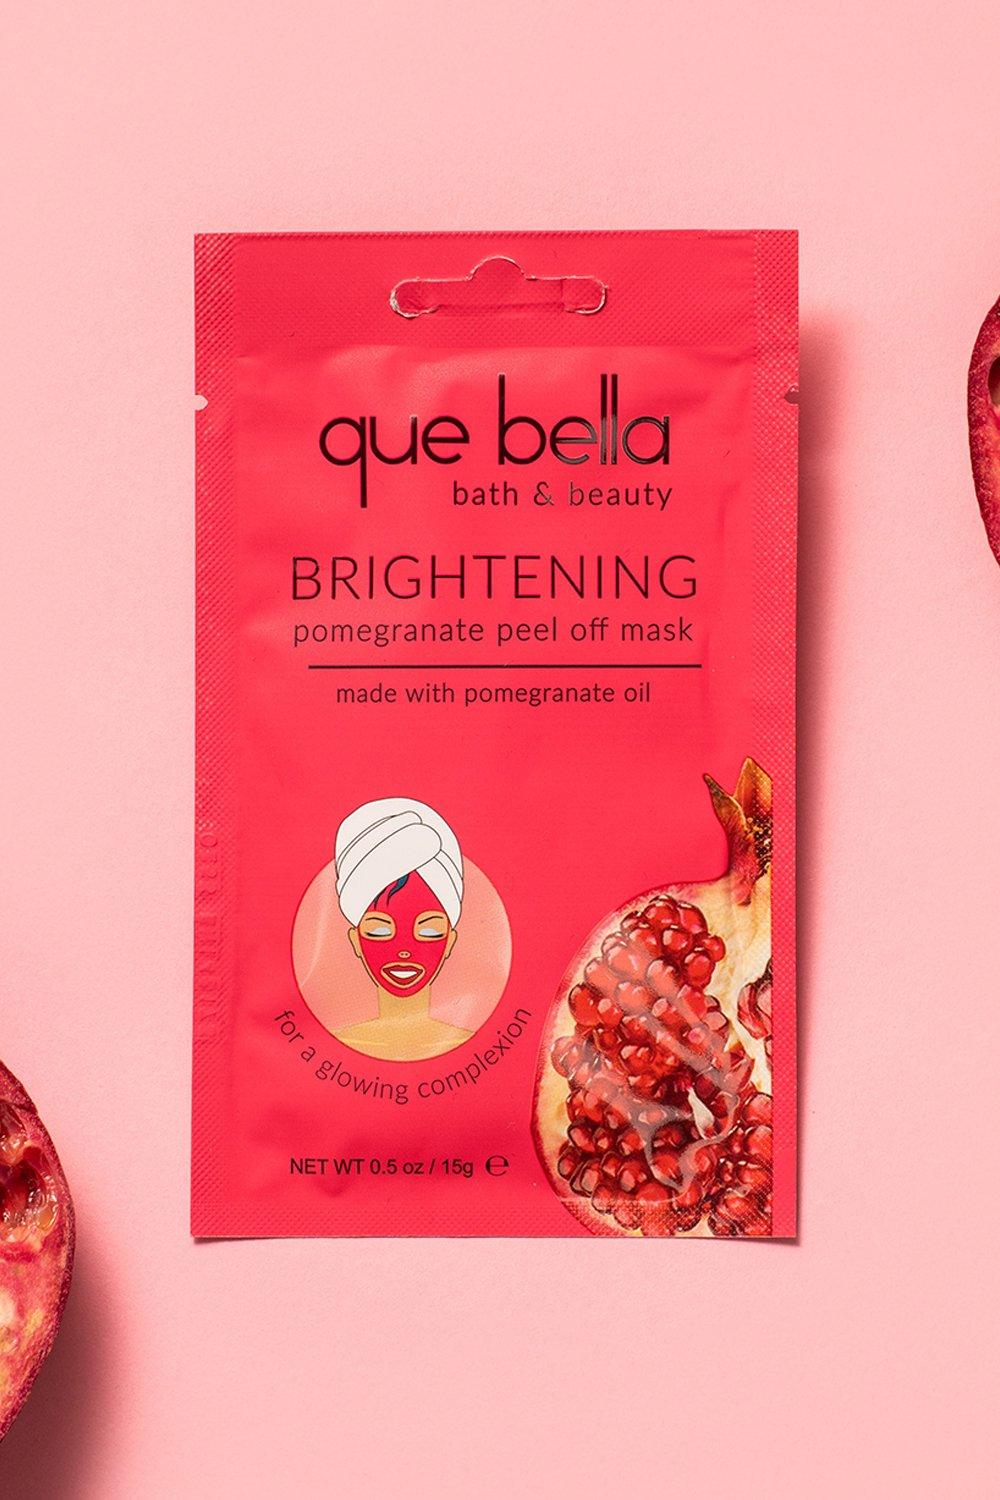 Boohoo - Que bella brightening pomegranate mask